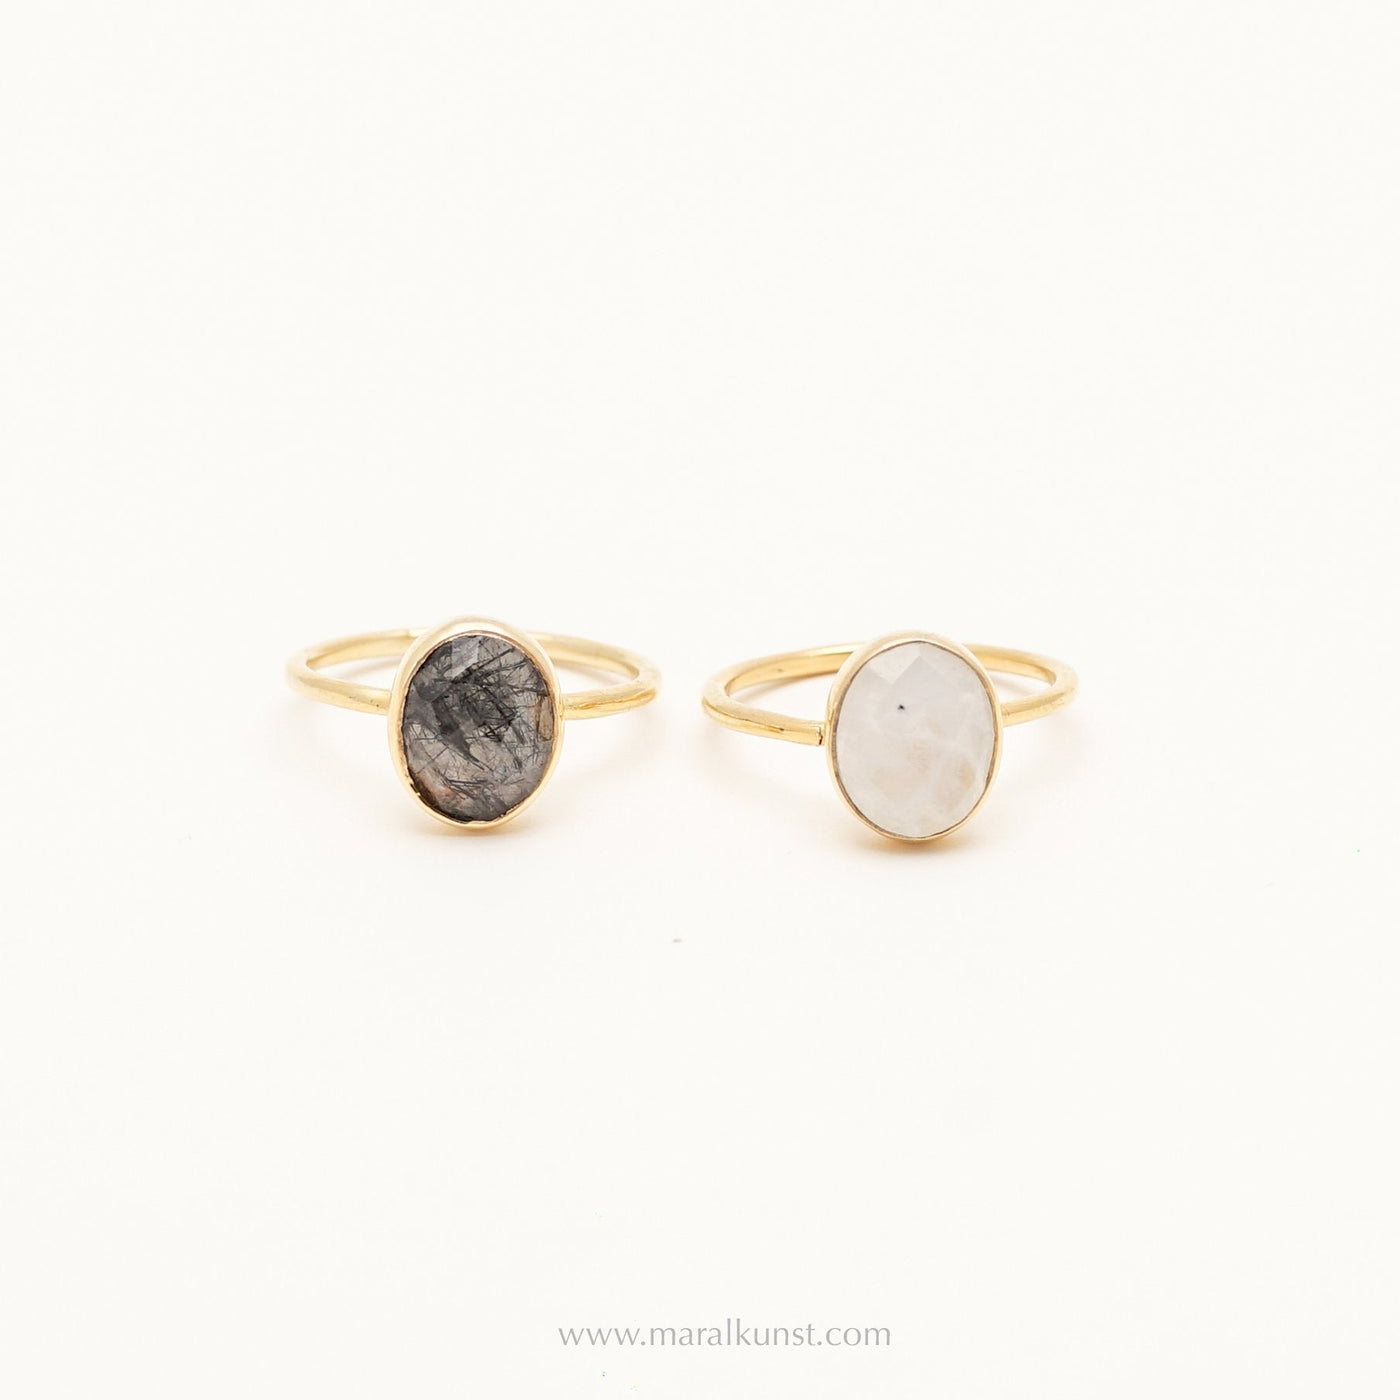 Multi Cabochon Gemstone Ring - Maral Kunst Jewelry